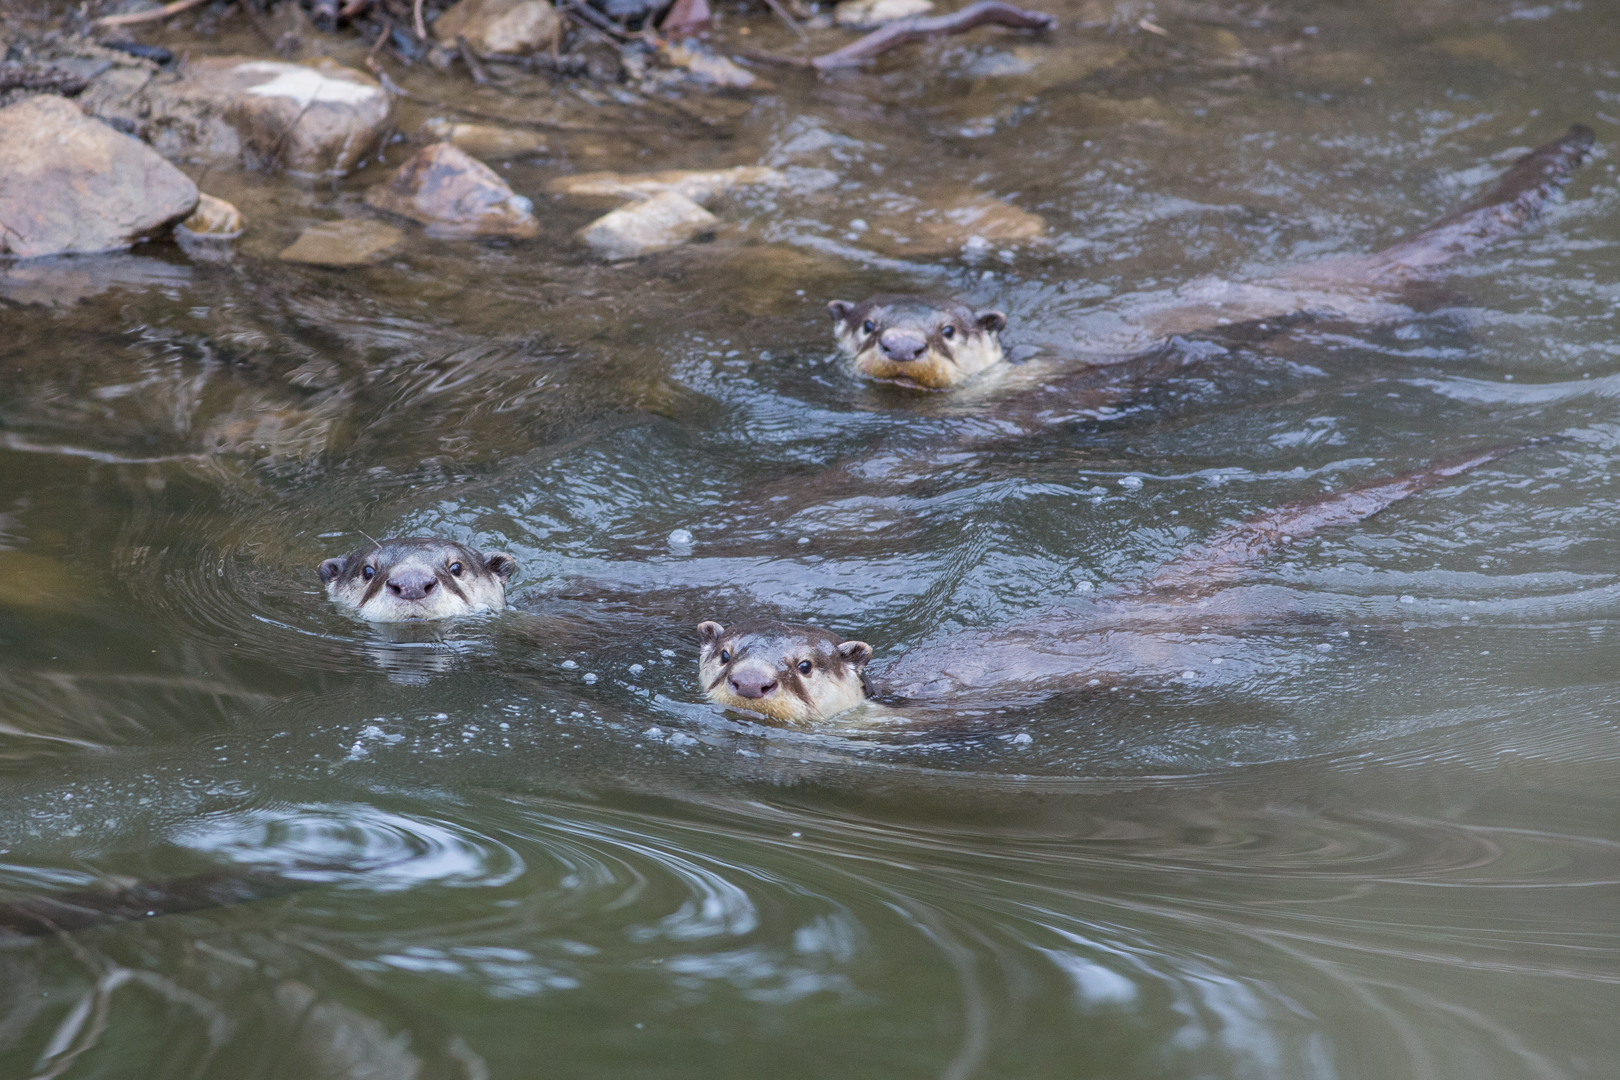 Otters in the Kariega River - Image taken by Brendon Jennings